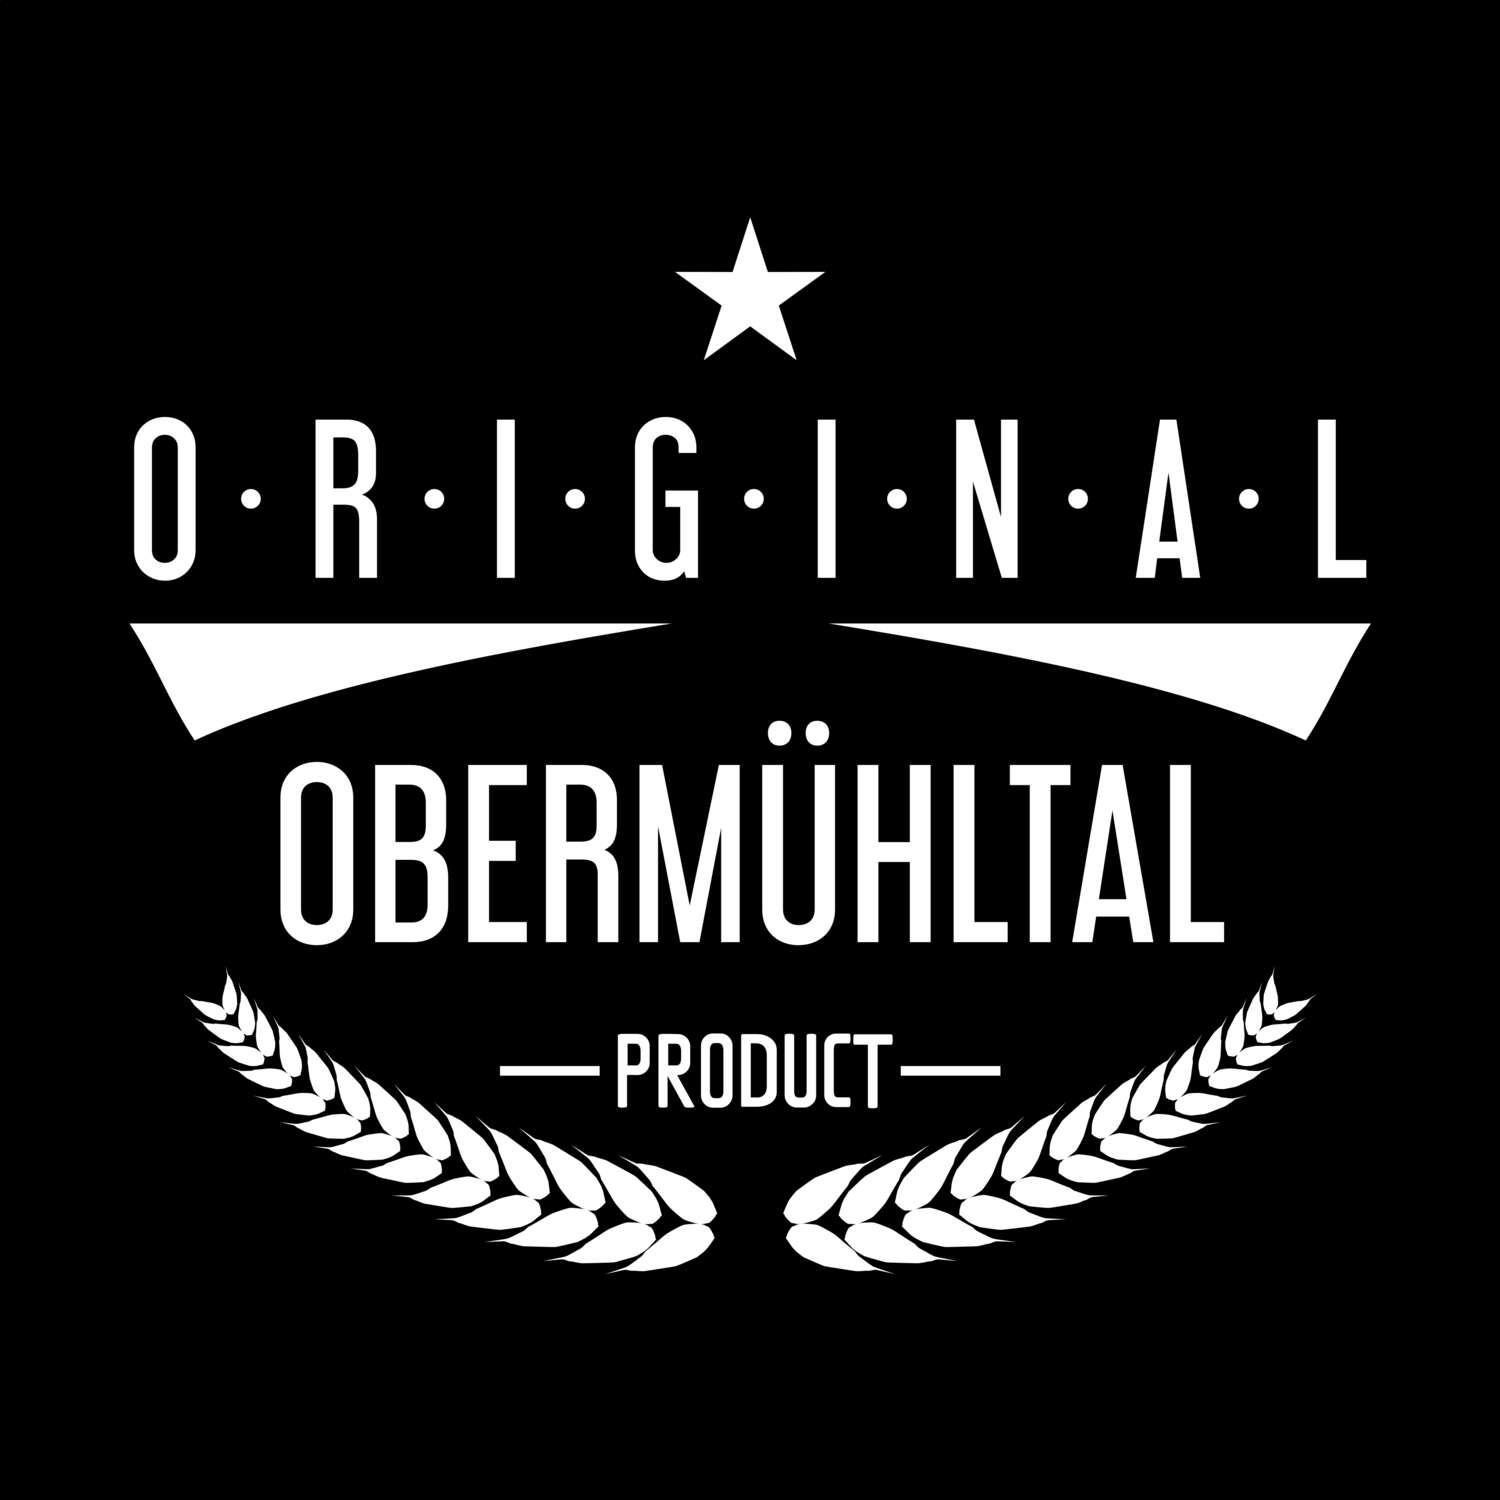 Obermühltal T-Shirt »Original Product«